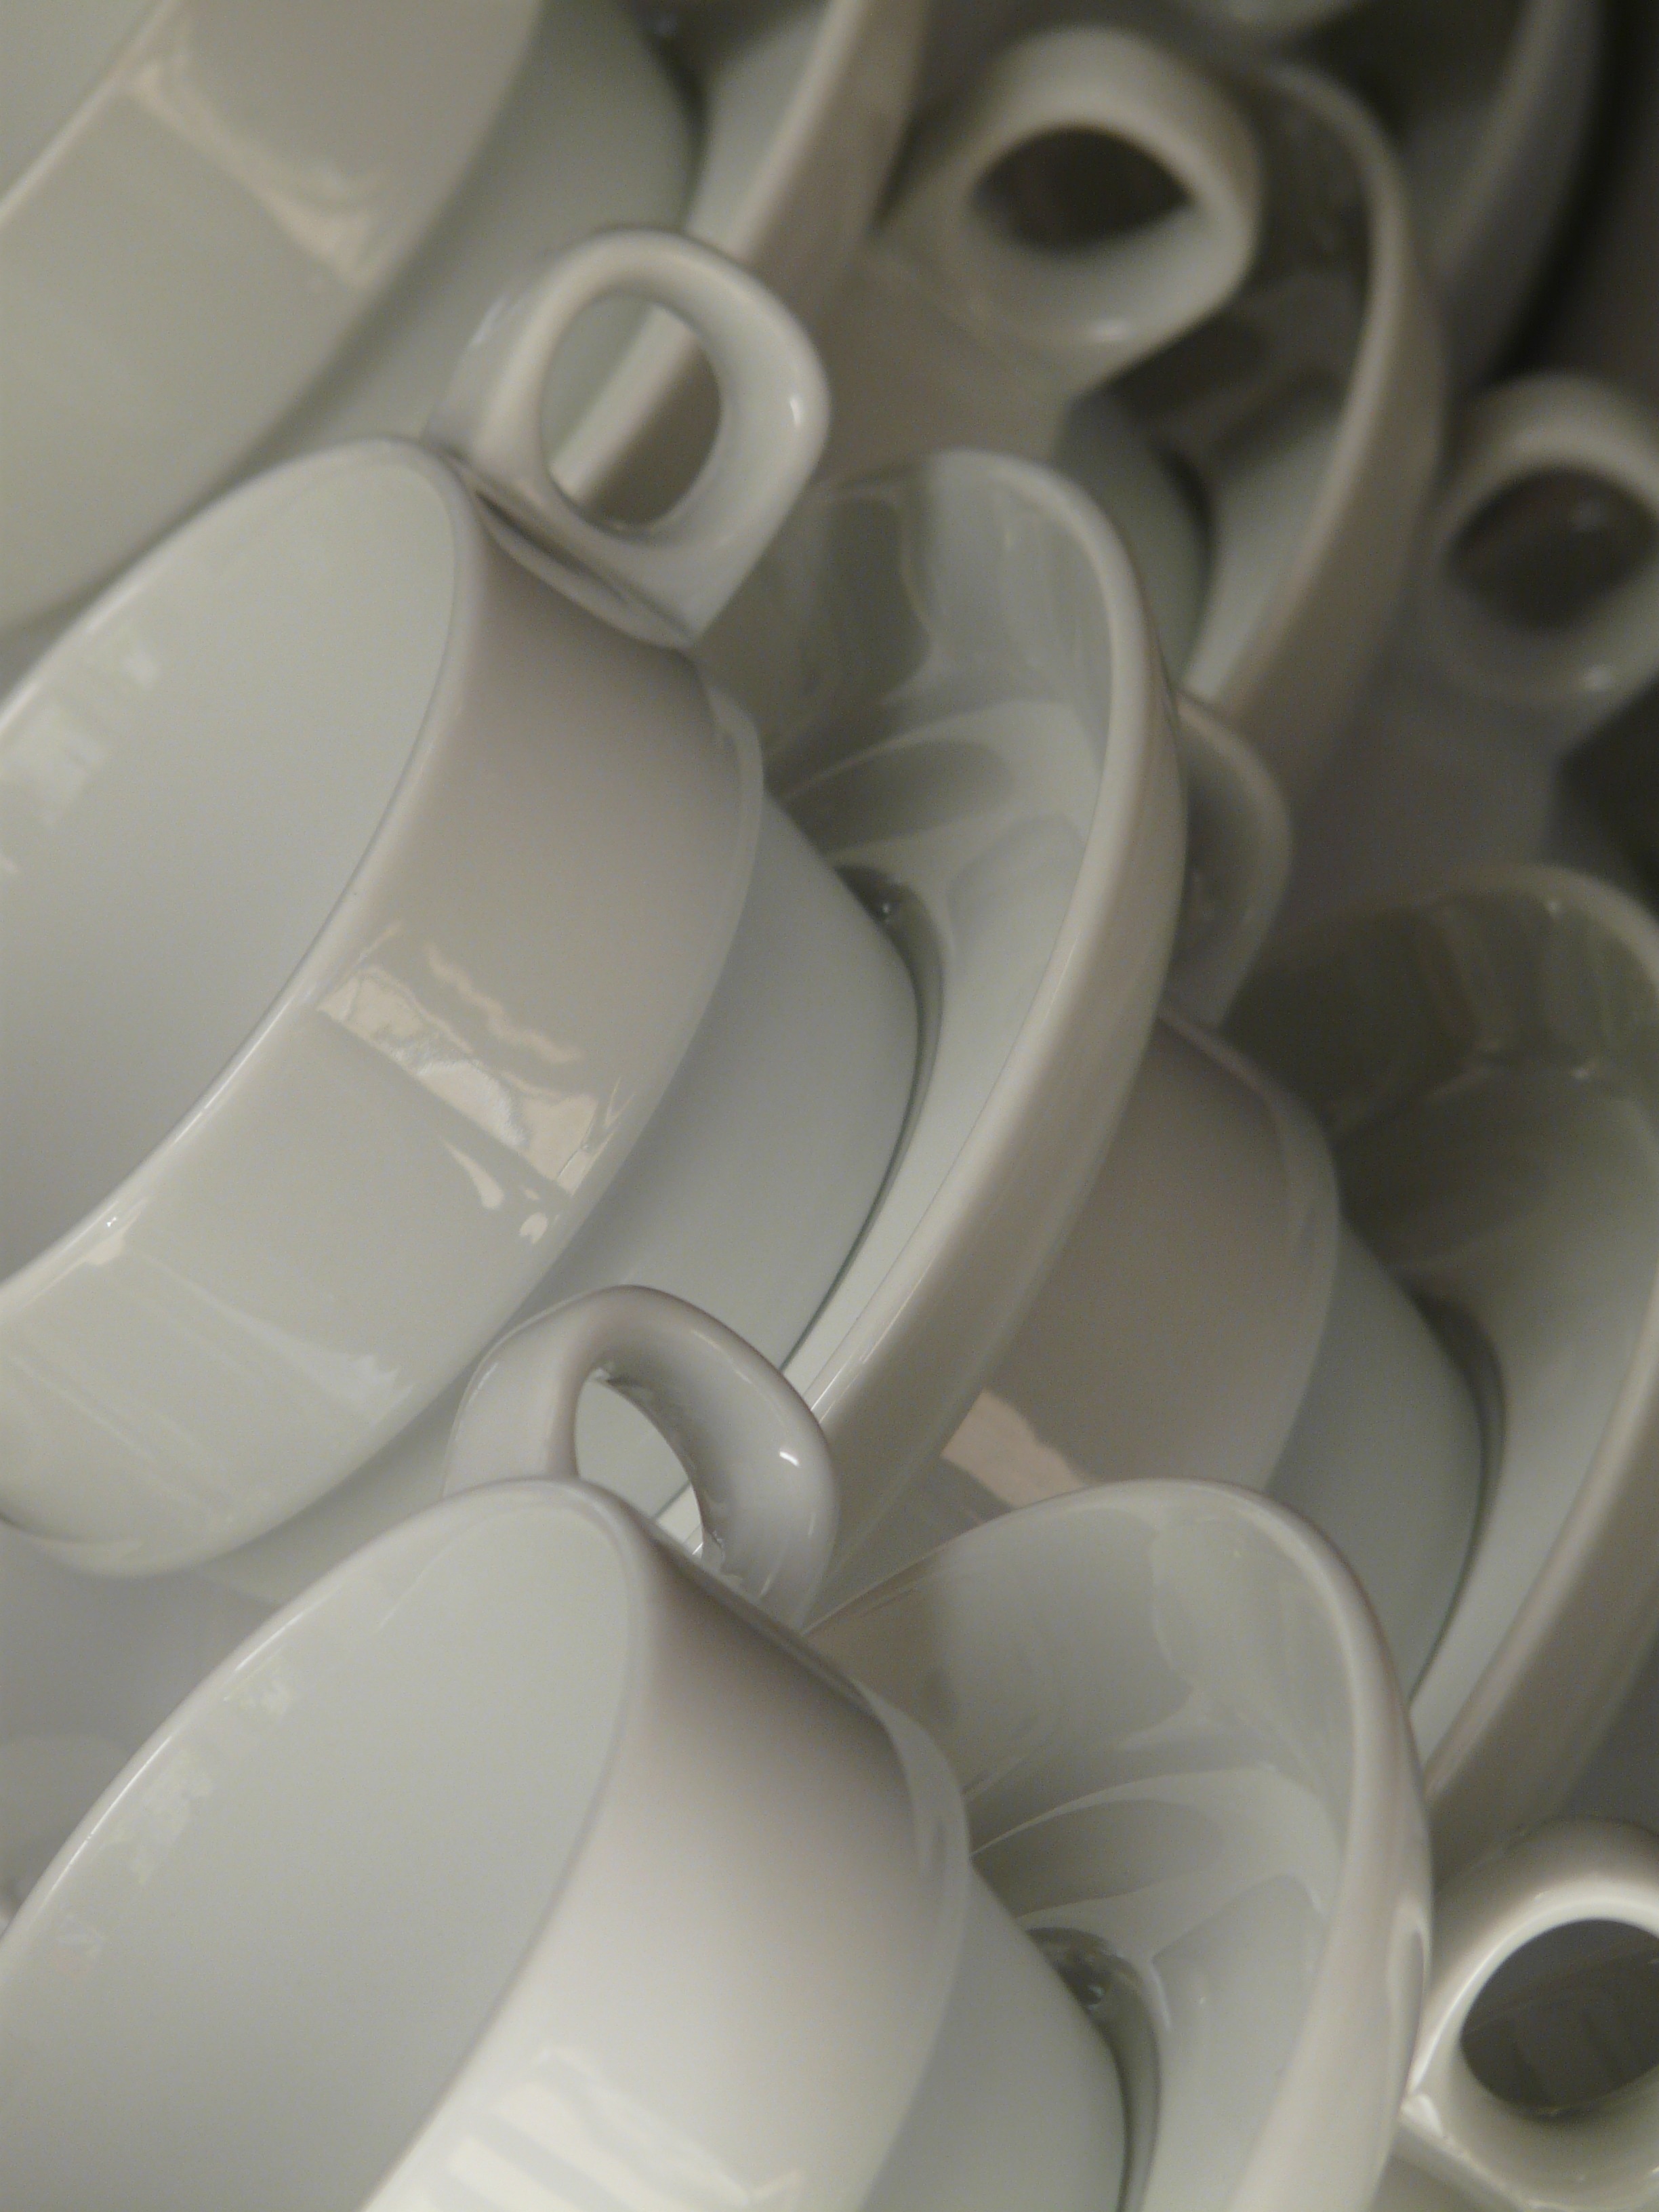 white ceramic teacup and saucer set